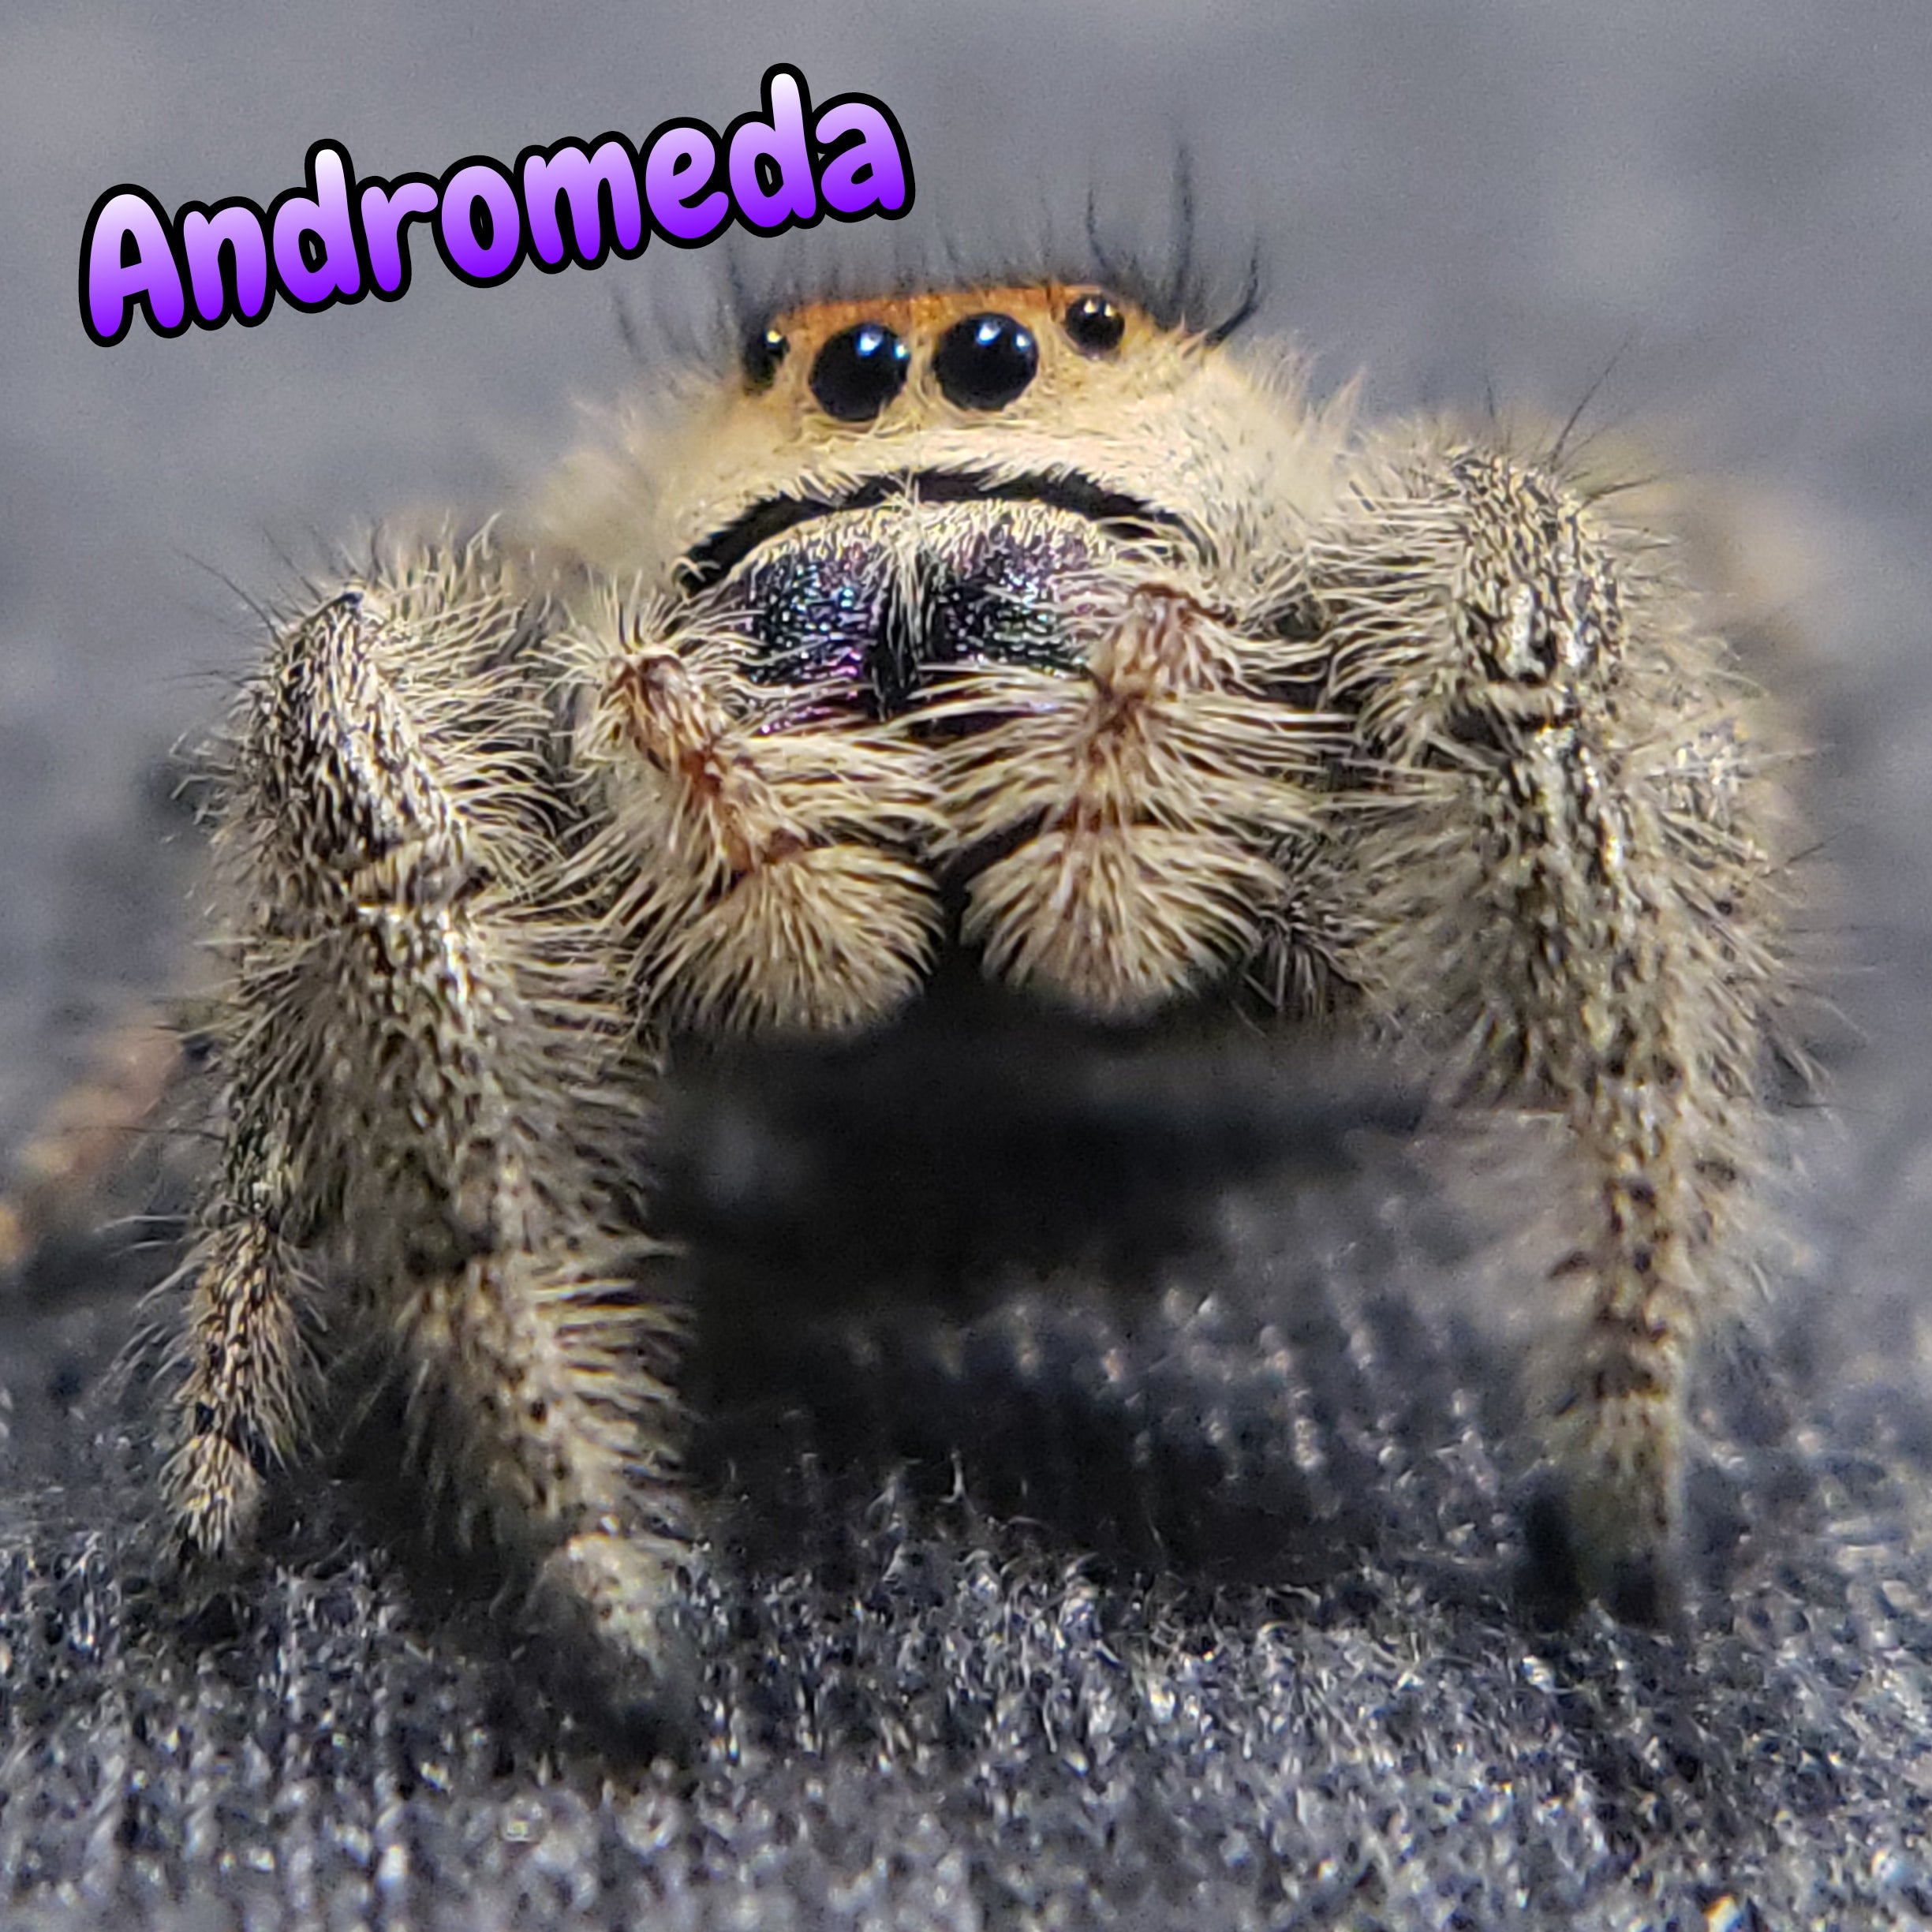 Regal Jumping Spider "Andromeda"